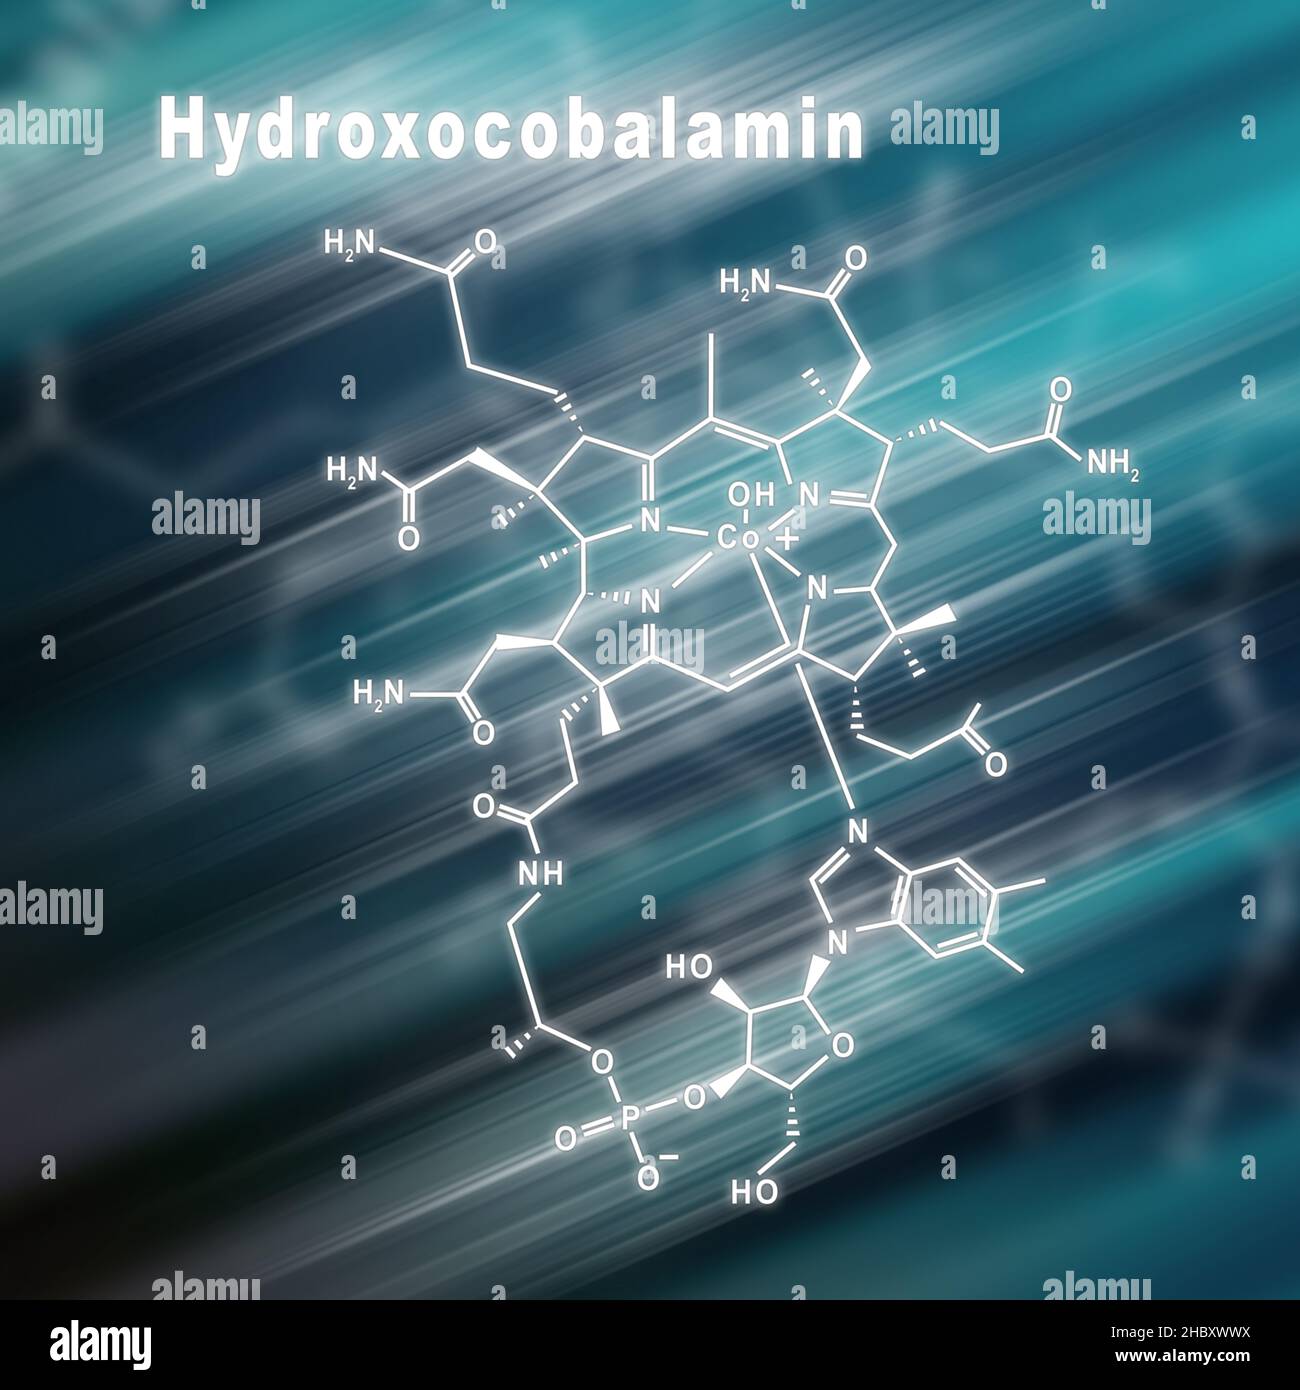 Hydroxocobalamine vitamine B12, formule chimique structurelle fond futuriste Banque D'Images